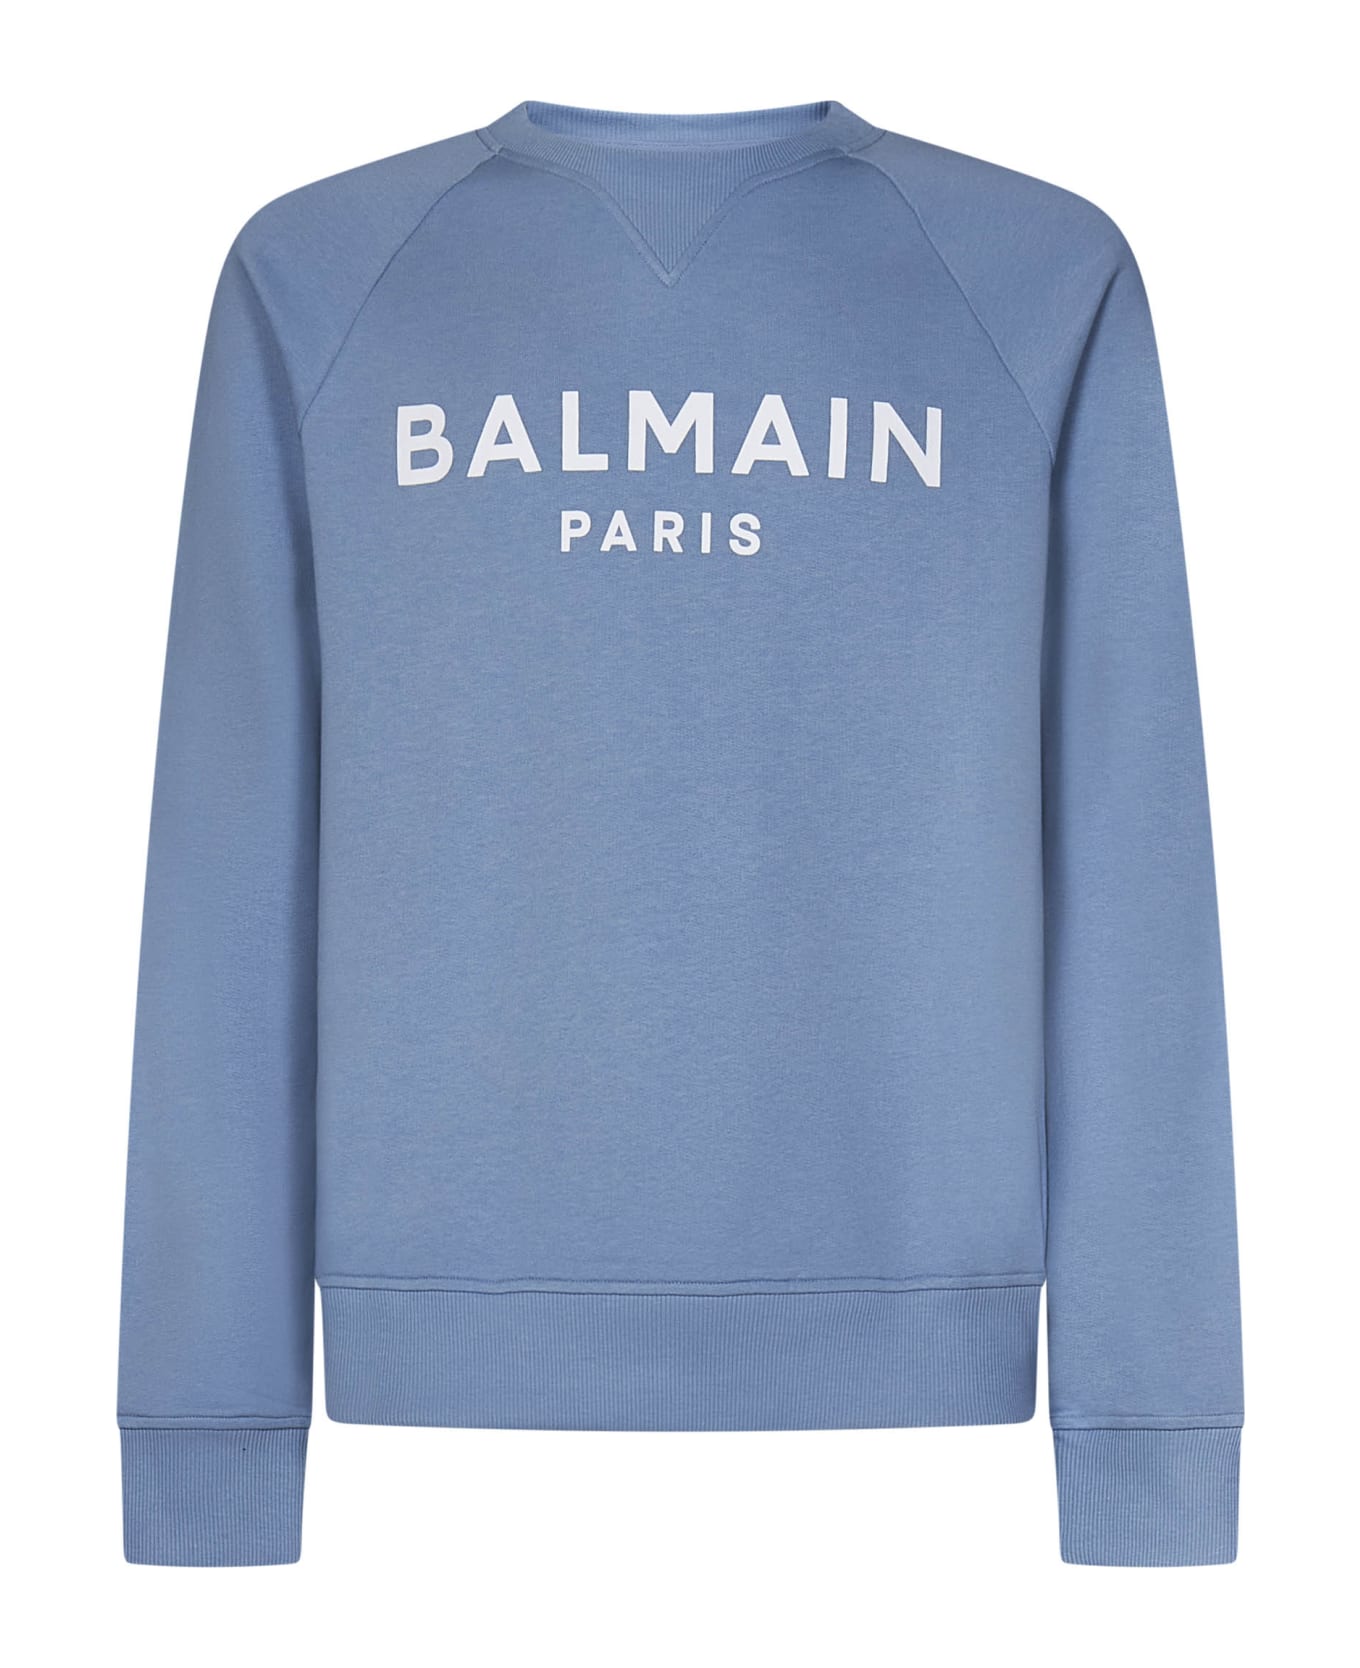 Balmain Paris  Paris Sweatshirt - Blue